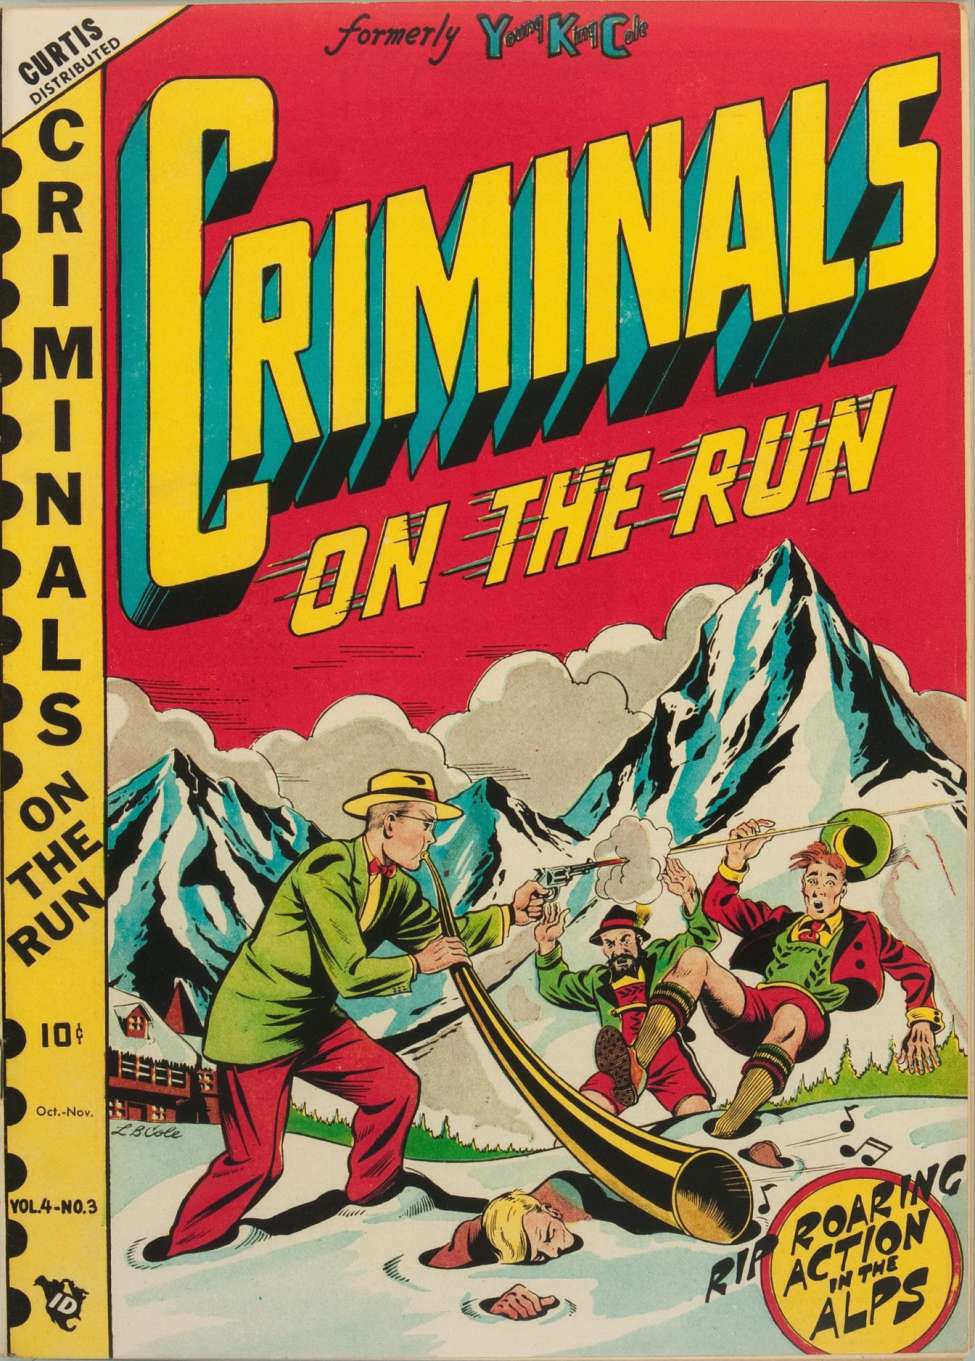 Book Cover For Criminals on the Run v4 3 (alt) - Version 2